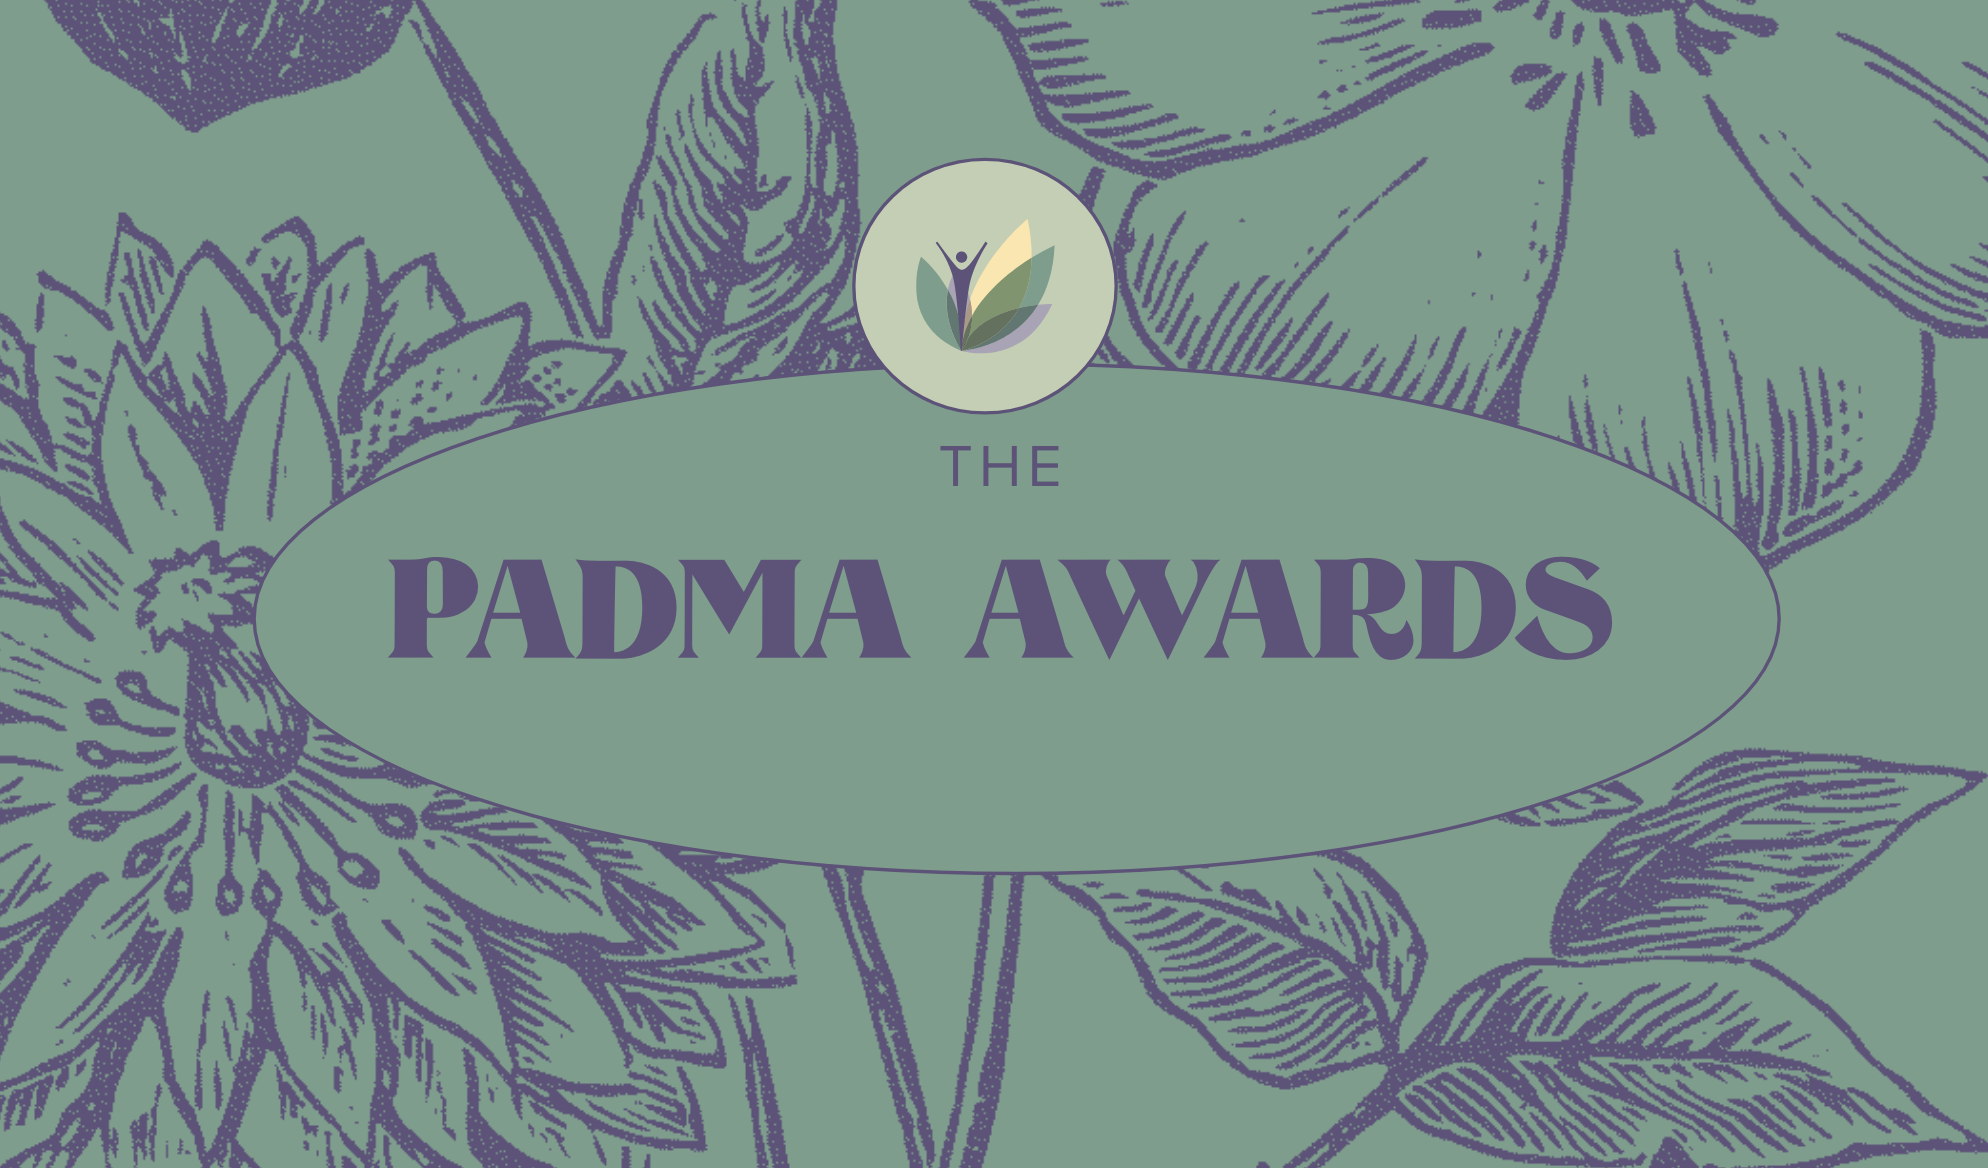 The Padma Awards